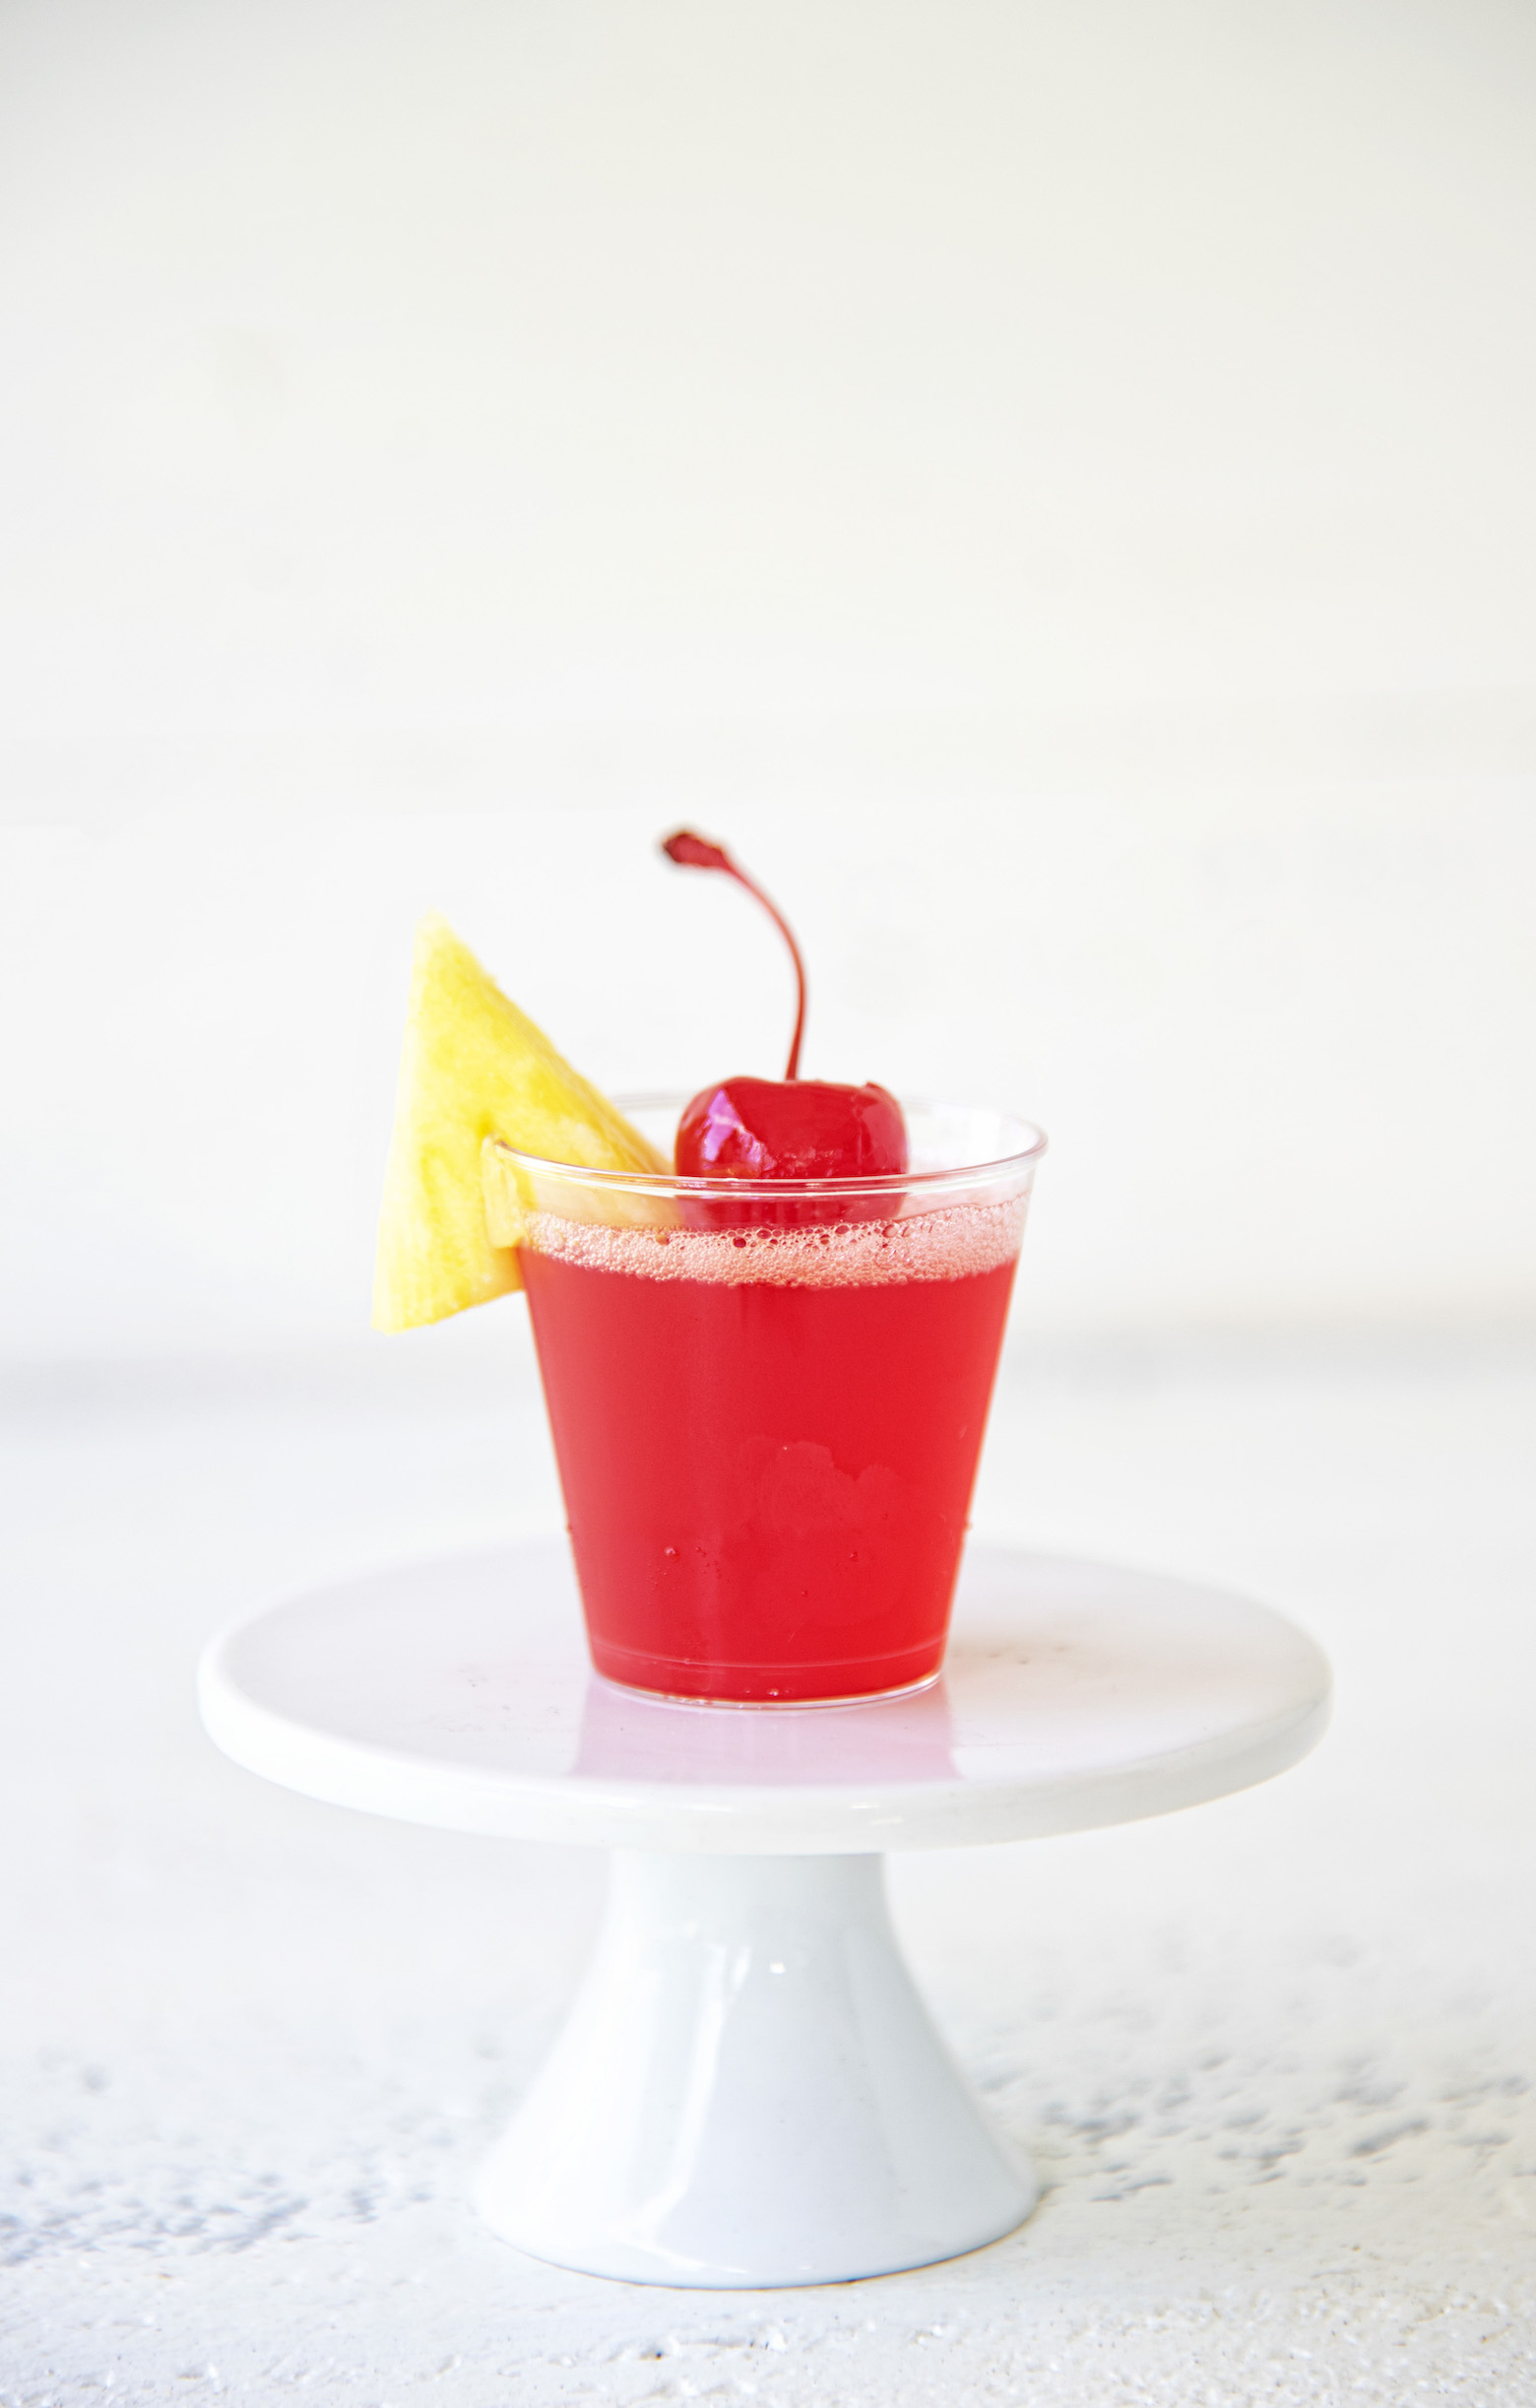 Fruit Punch Moonshine Jell-O Shots